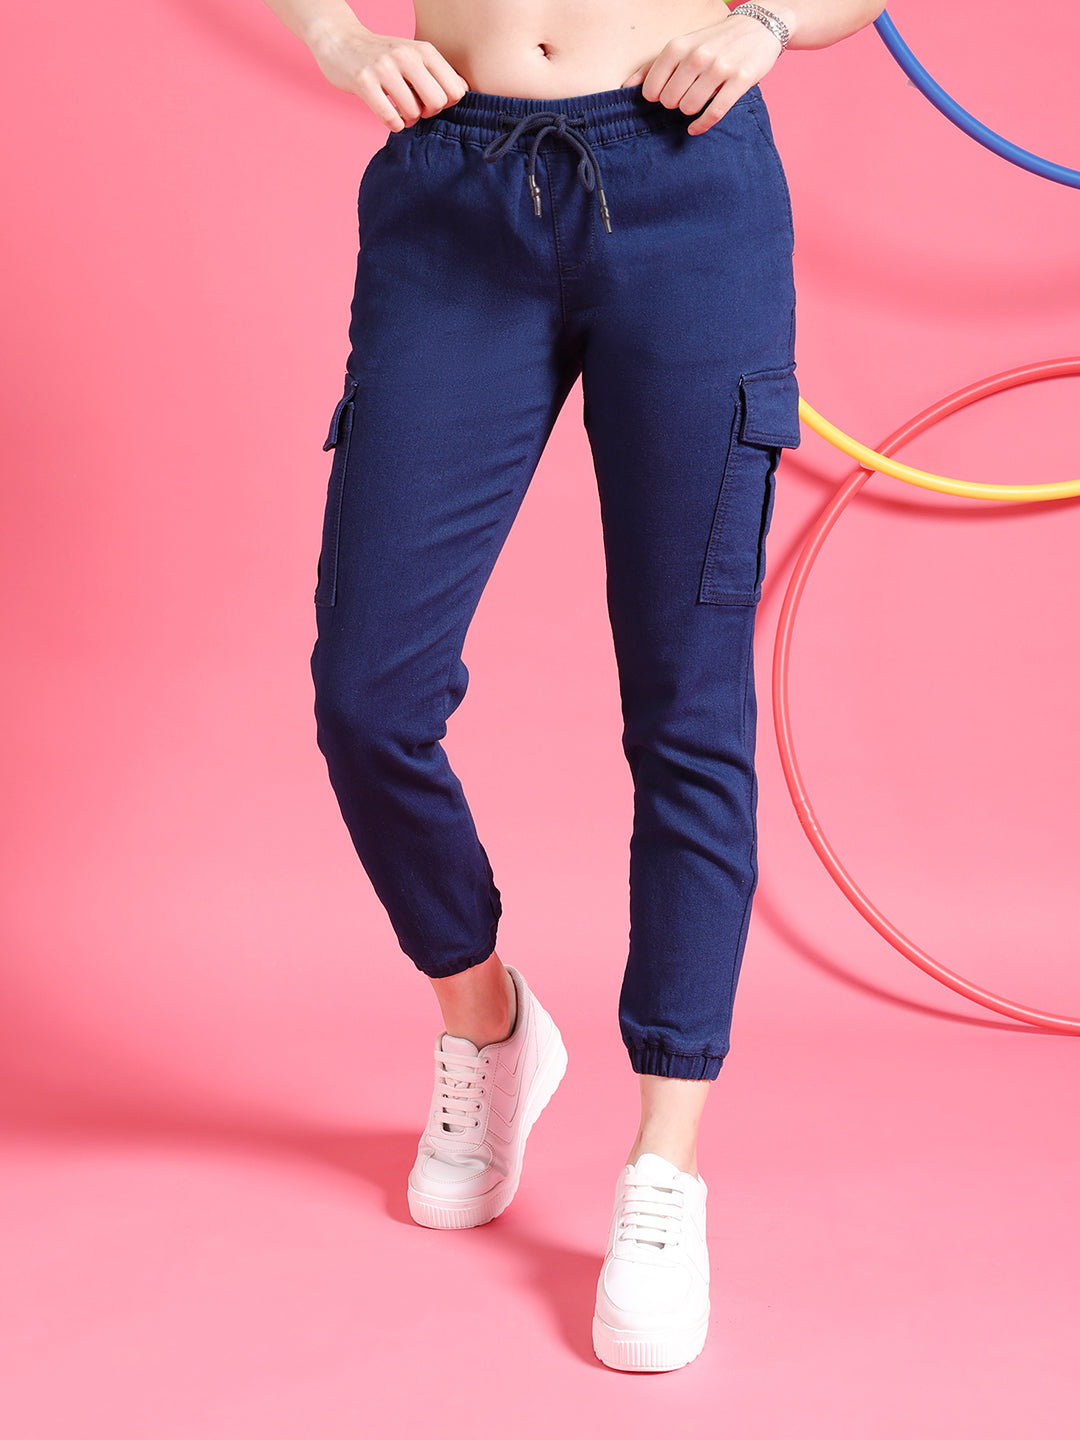 Shop Women Regular Fit Jeans Online.